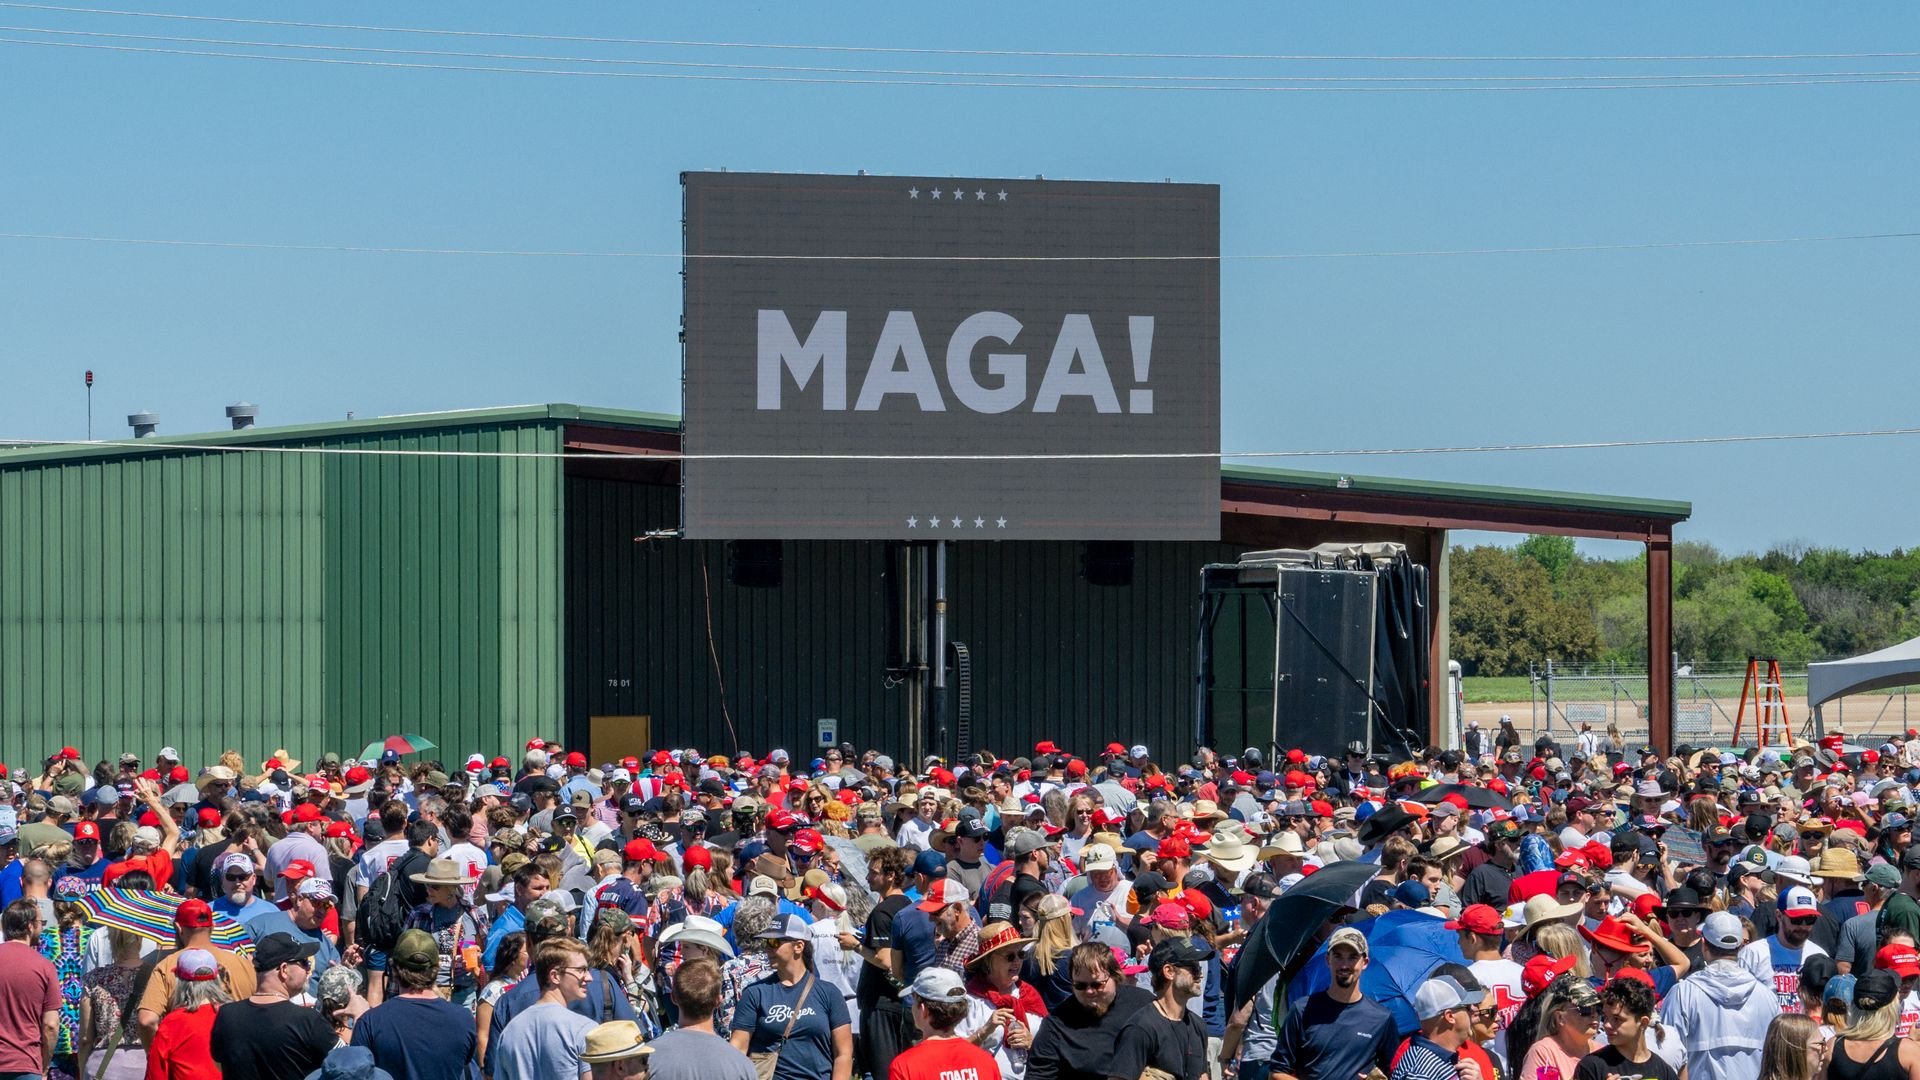 At Waco rally, Trump blasts probers as "maniacs"